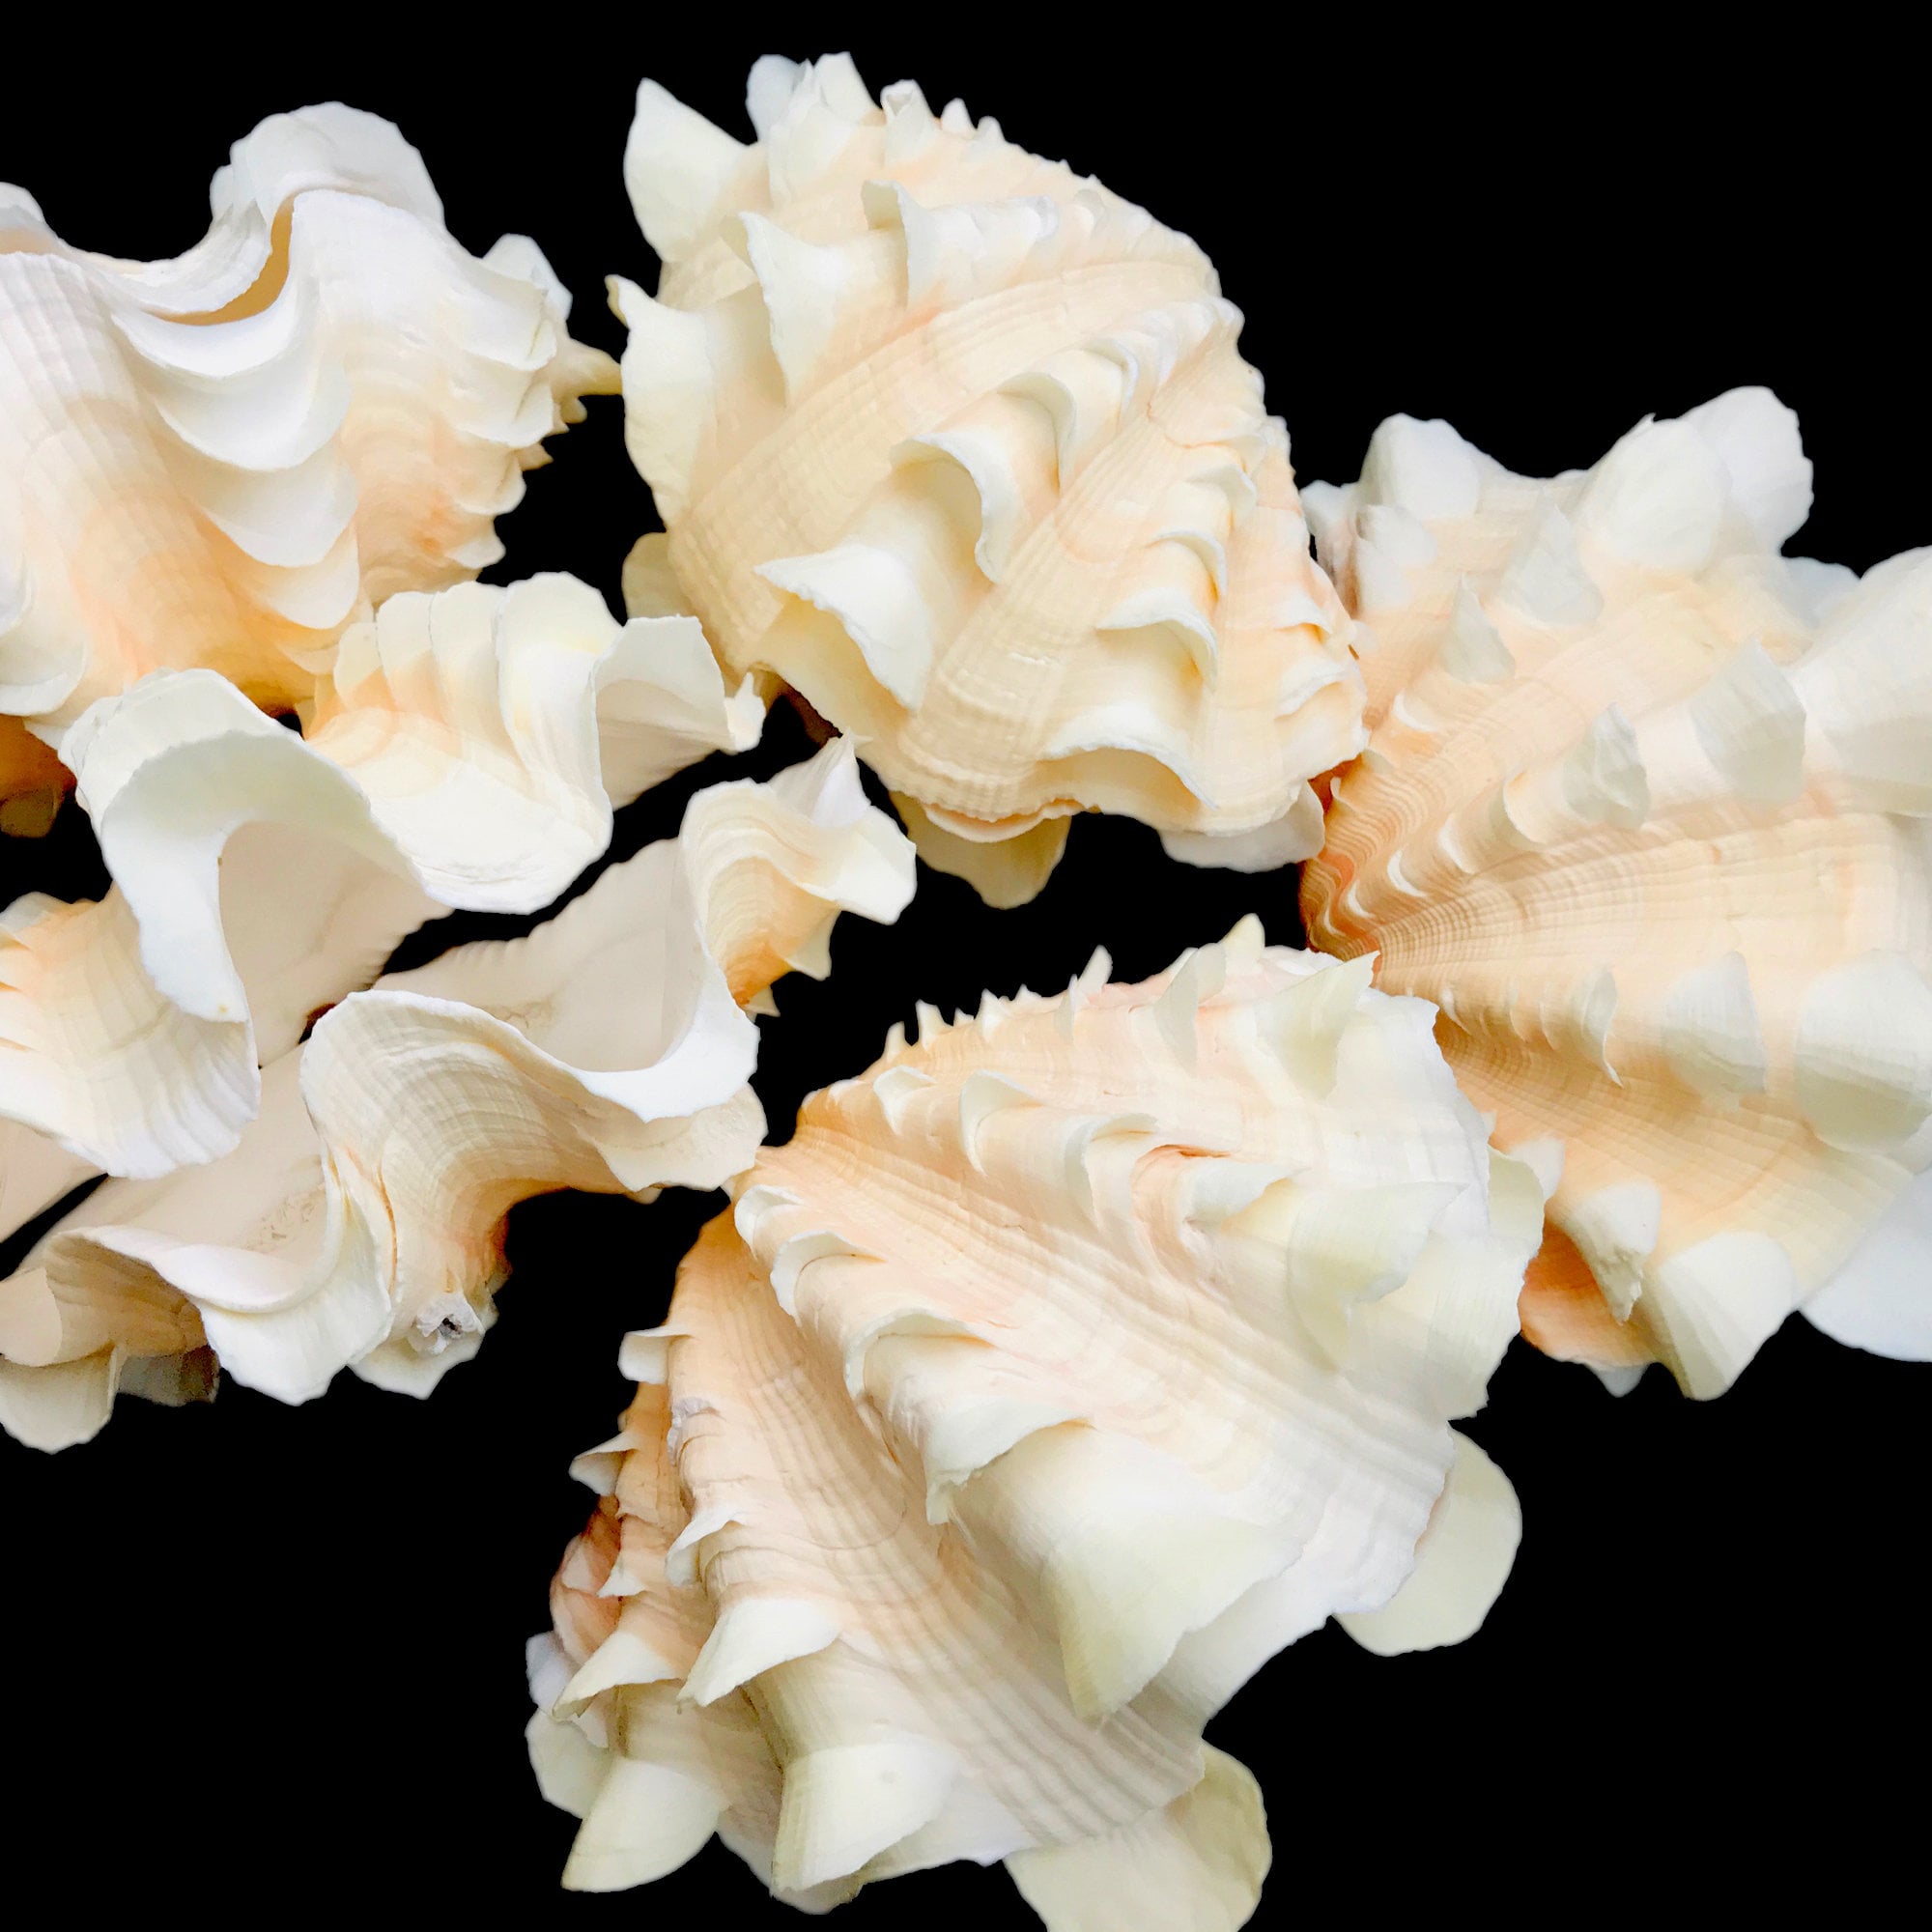 Marine Sea Sell Decor 10-21m Giant Clam Tridacna Big Conch Natural